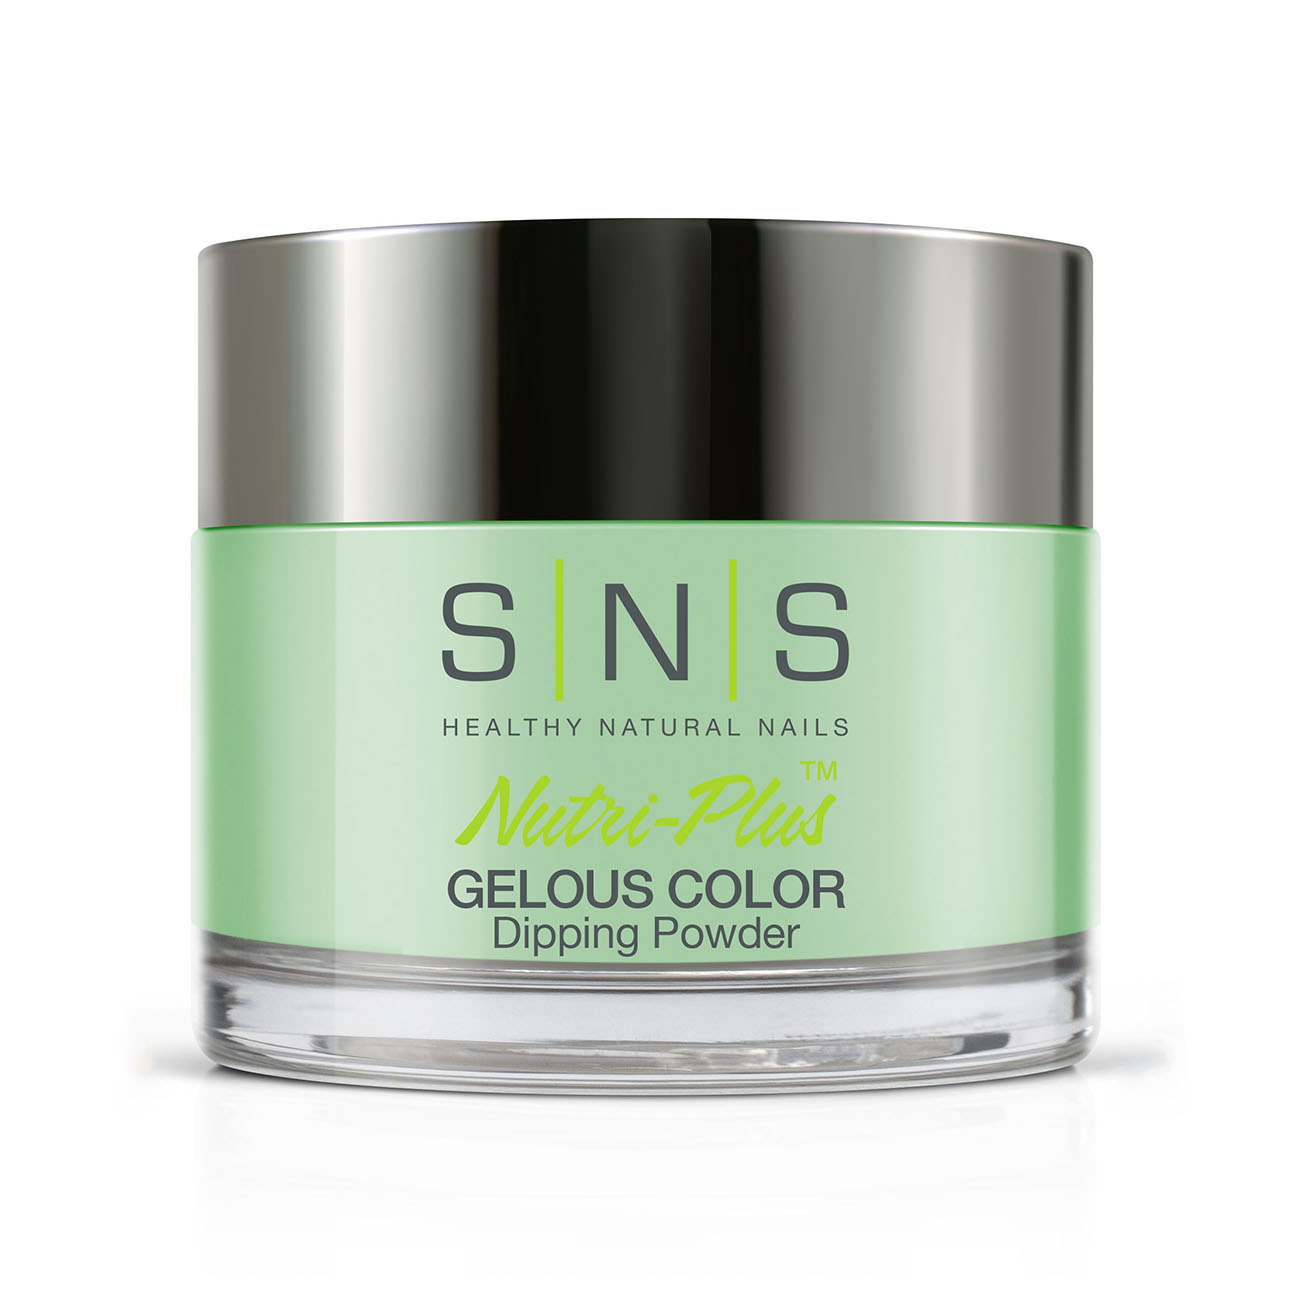 SNS Nails # 19 Carolina Blossom 28g (1oz) | Gelous Dipping Powder